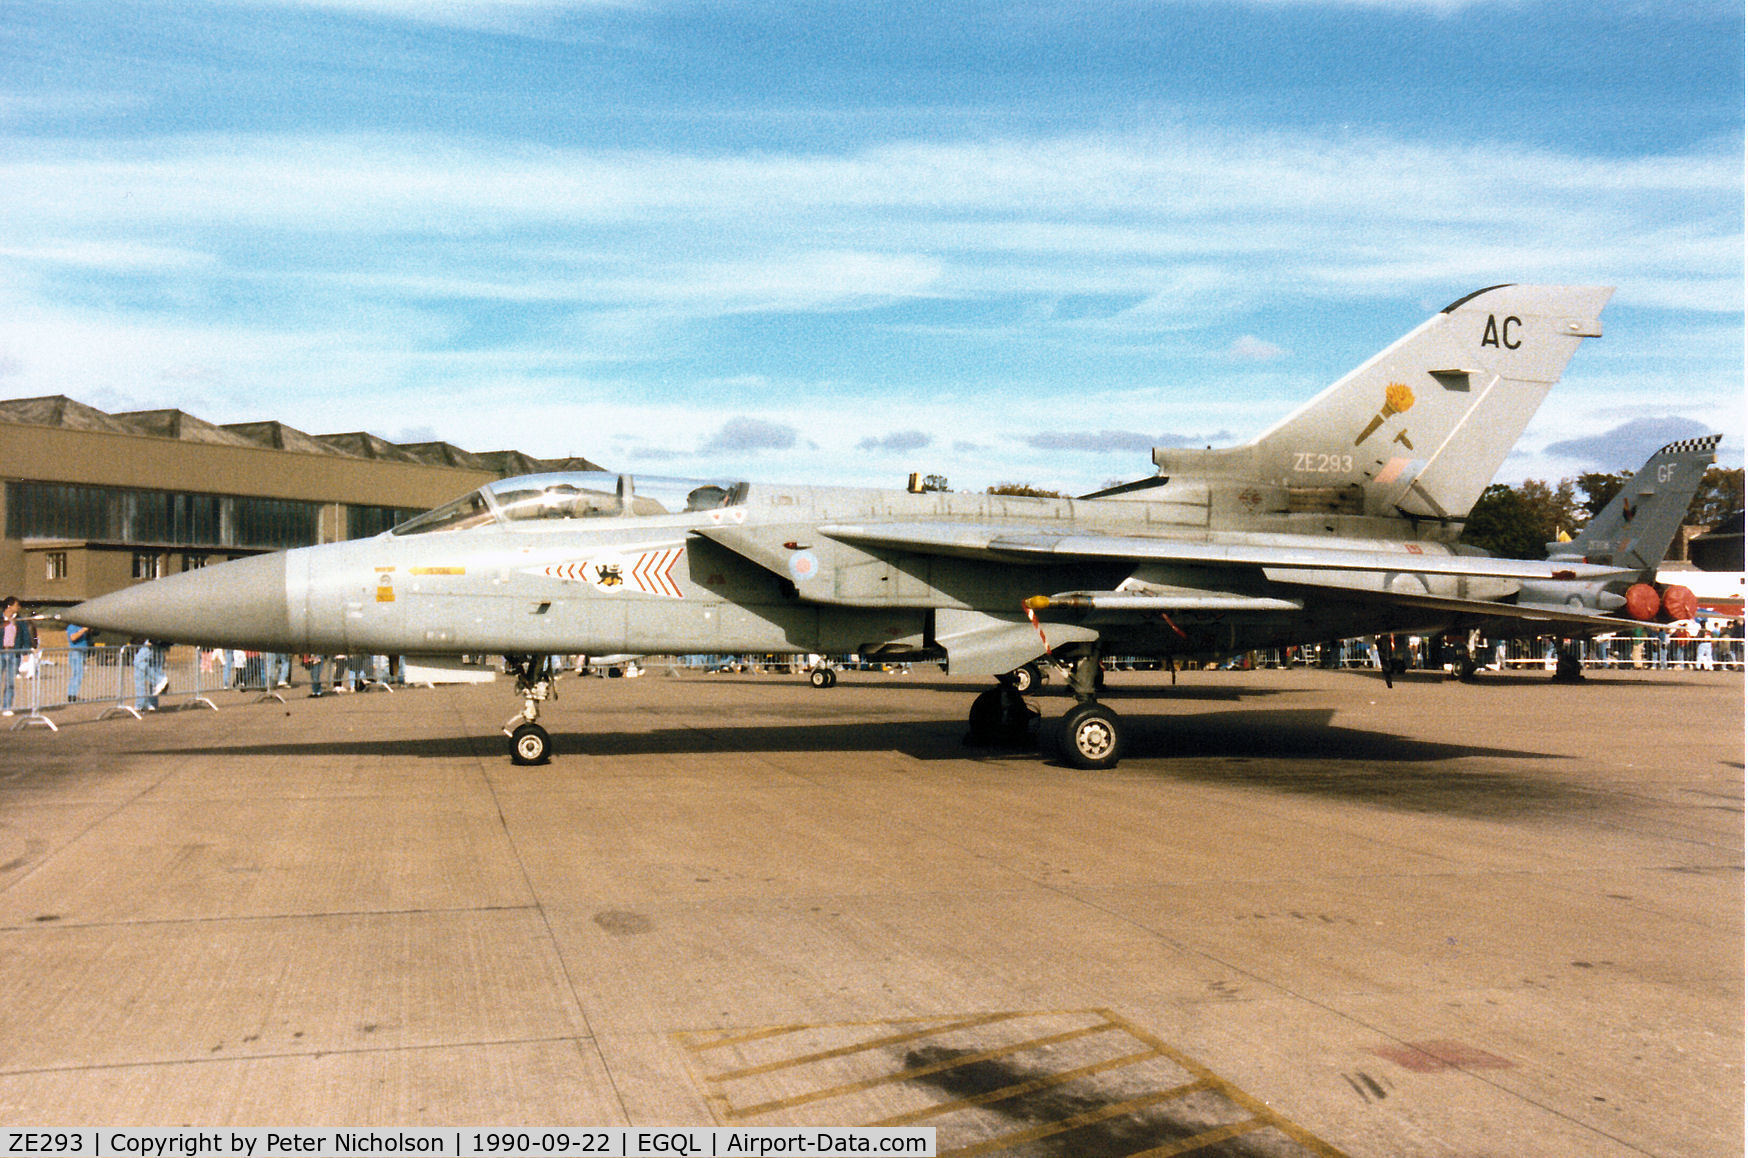 ZE293, 1987 Panavia Tornado F.3 C/N 629/AT023/3280, Tornado F.3 of 229 Operational Conversion Unit on display at the 1990 RAF Leuchars Airshow.